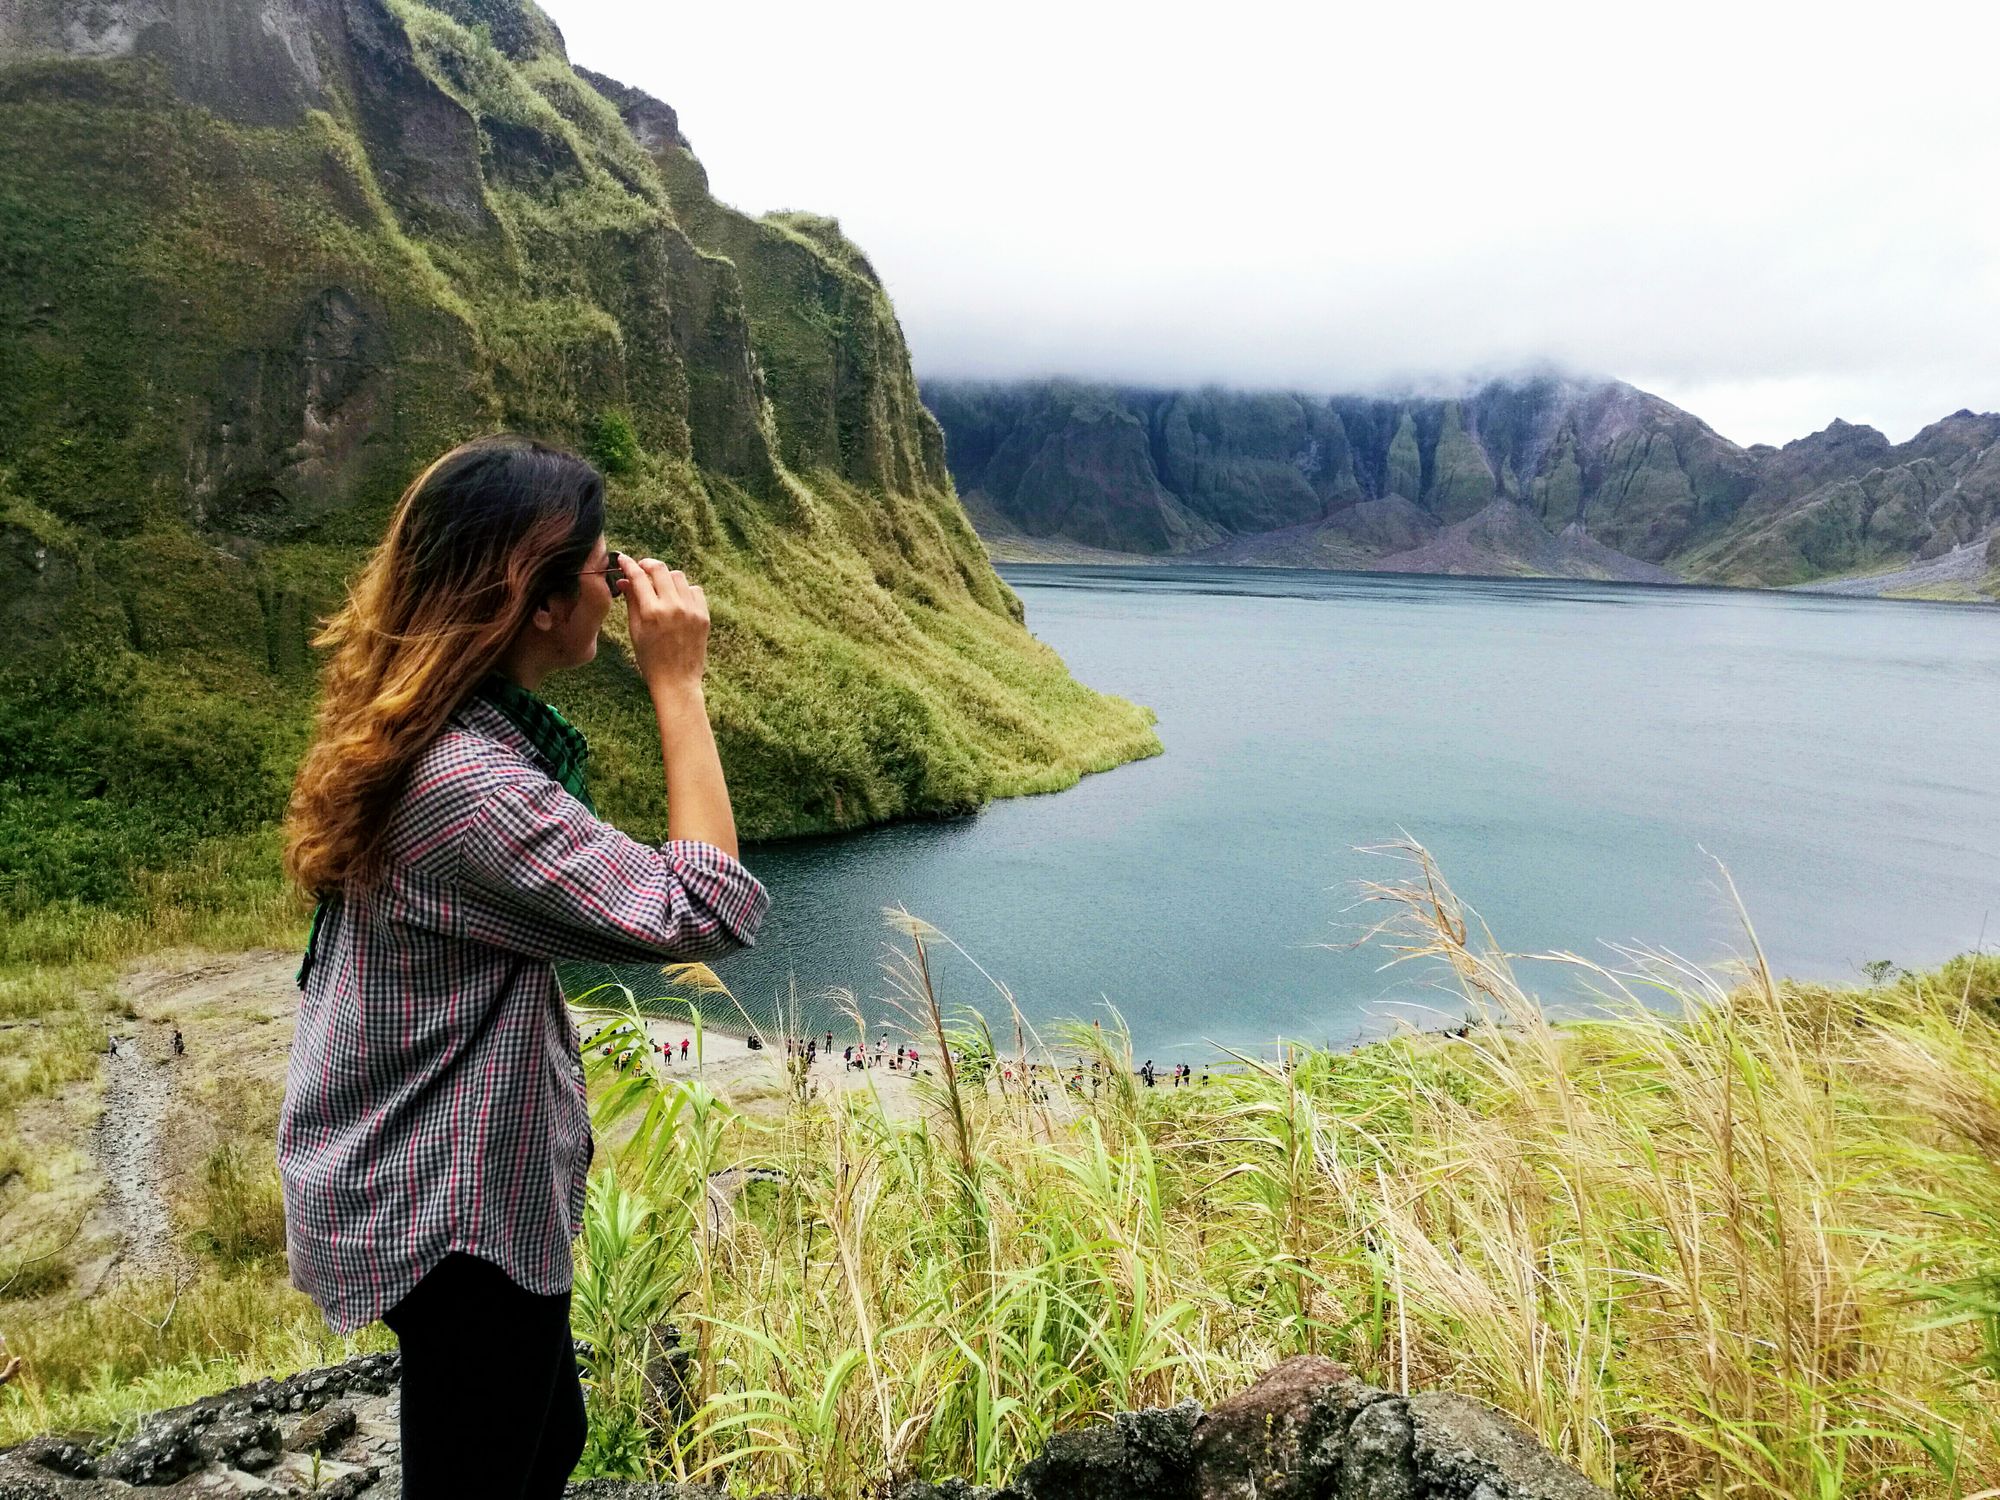 Mt. Pinatubo Crater Lake Day Hike